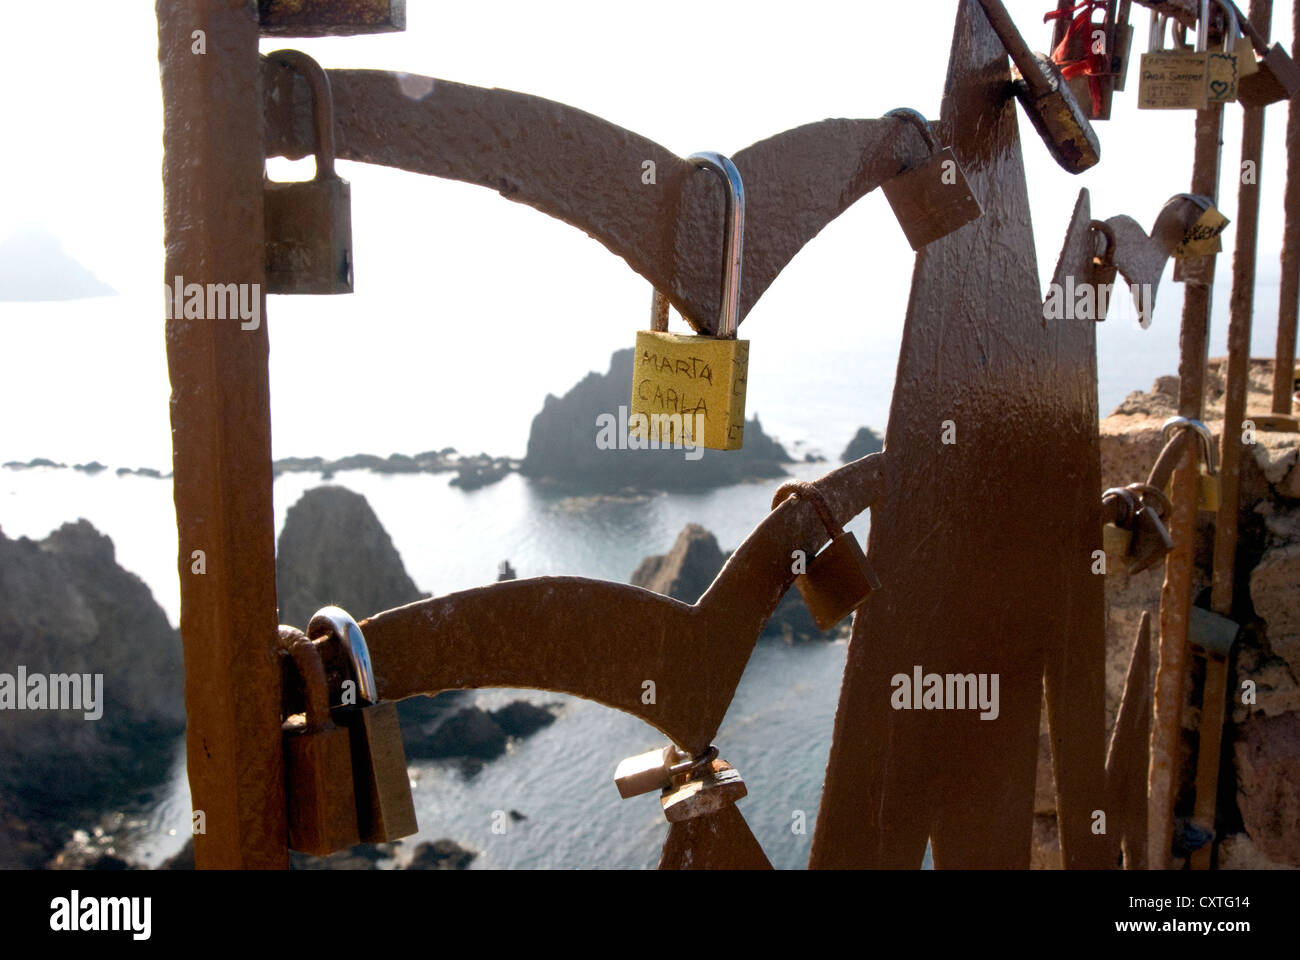 eternity padlocks on railings overlooking the Mediterranean sea Stock Photo